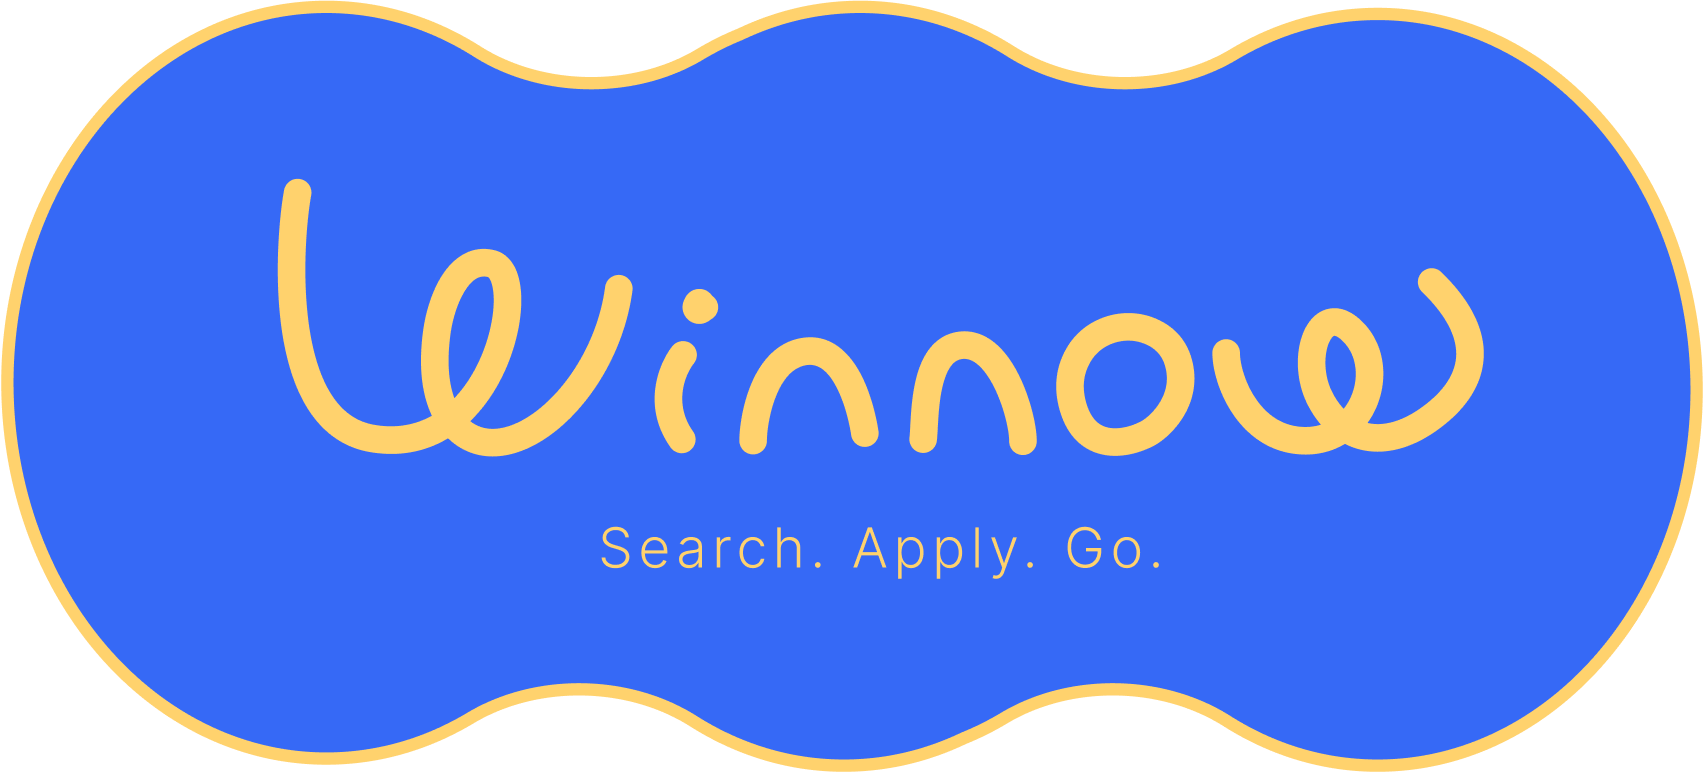 winnow: apply. search. go.